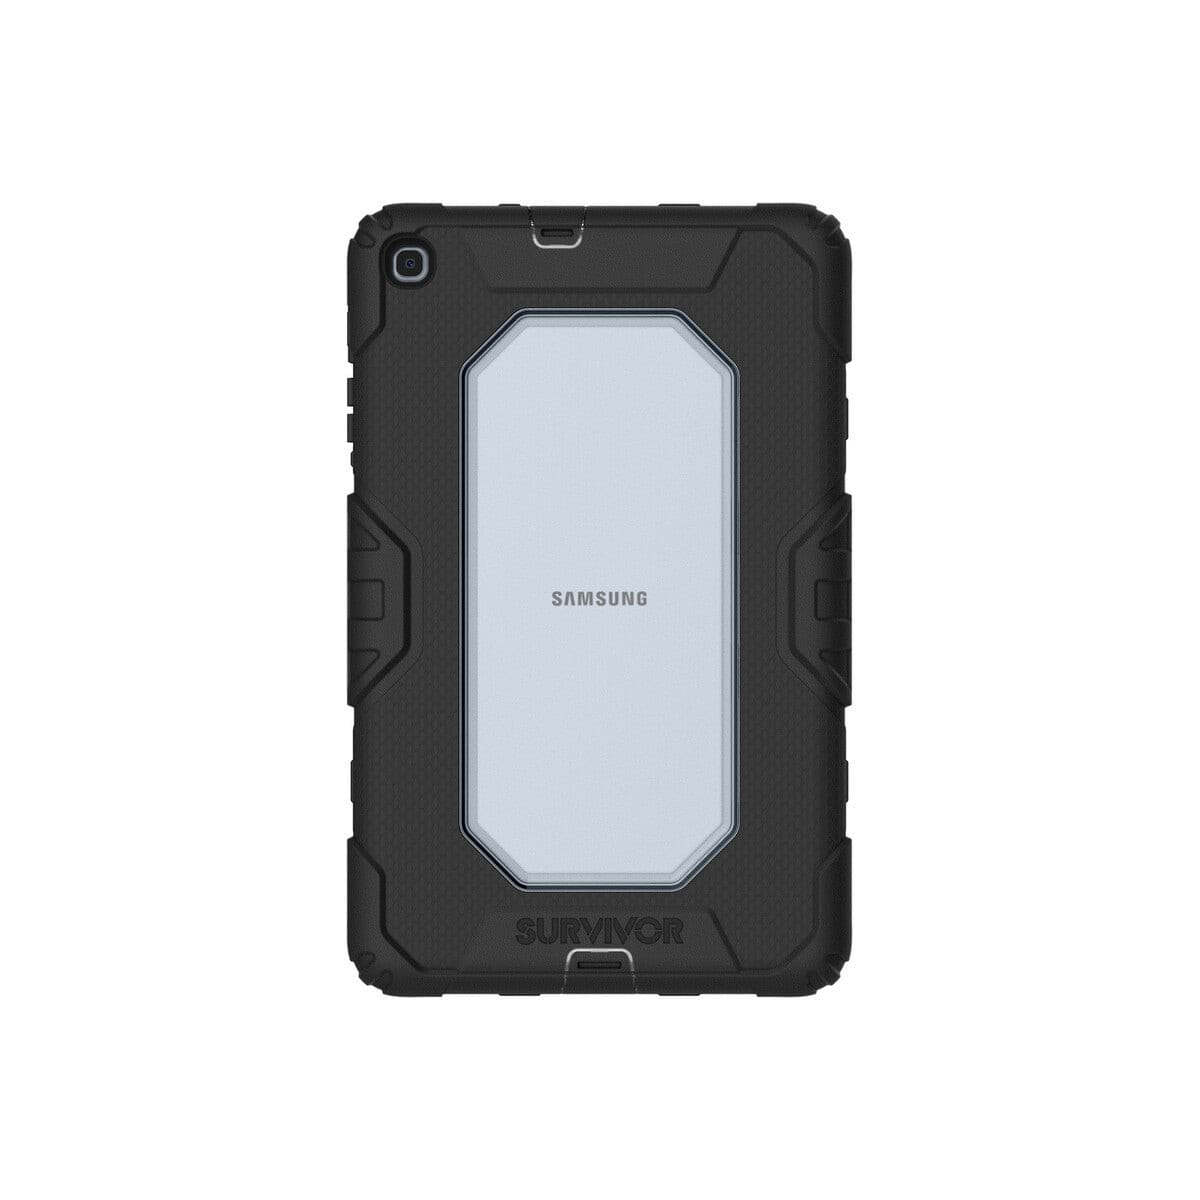 Griffin Survivor All-Terrain for Samsung Galaxy Tab A 10.1 (2019) Rugged Case.